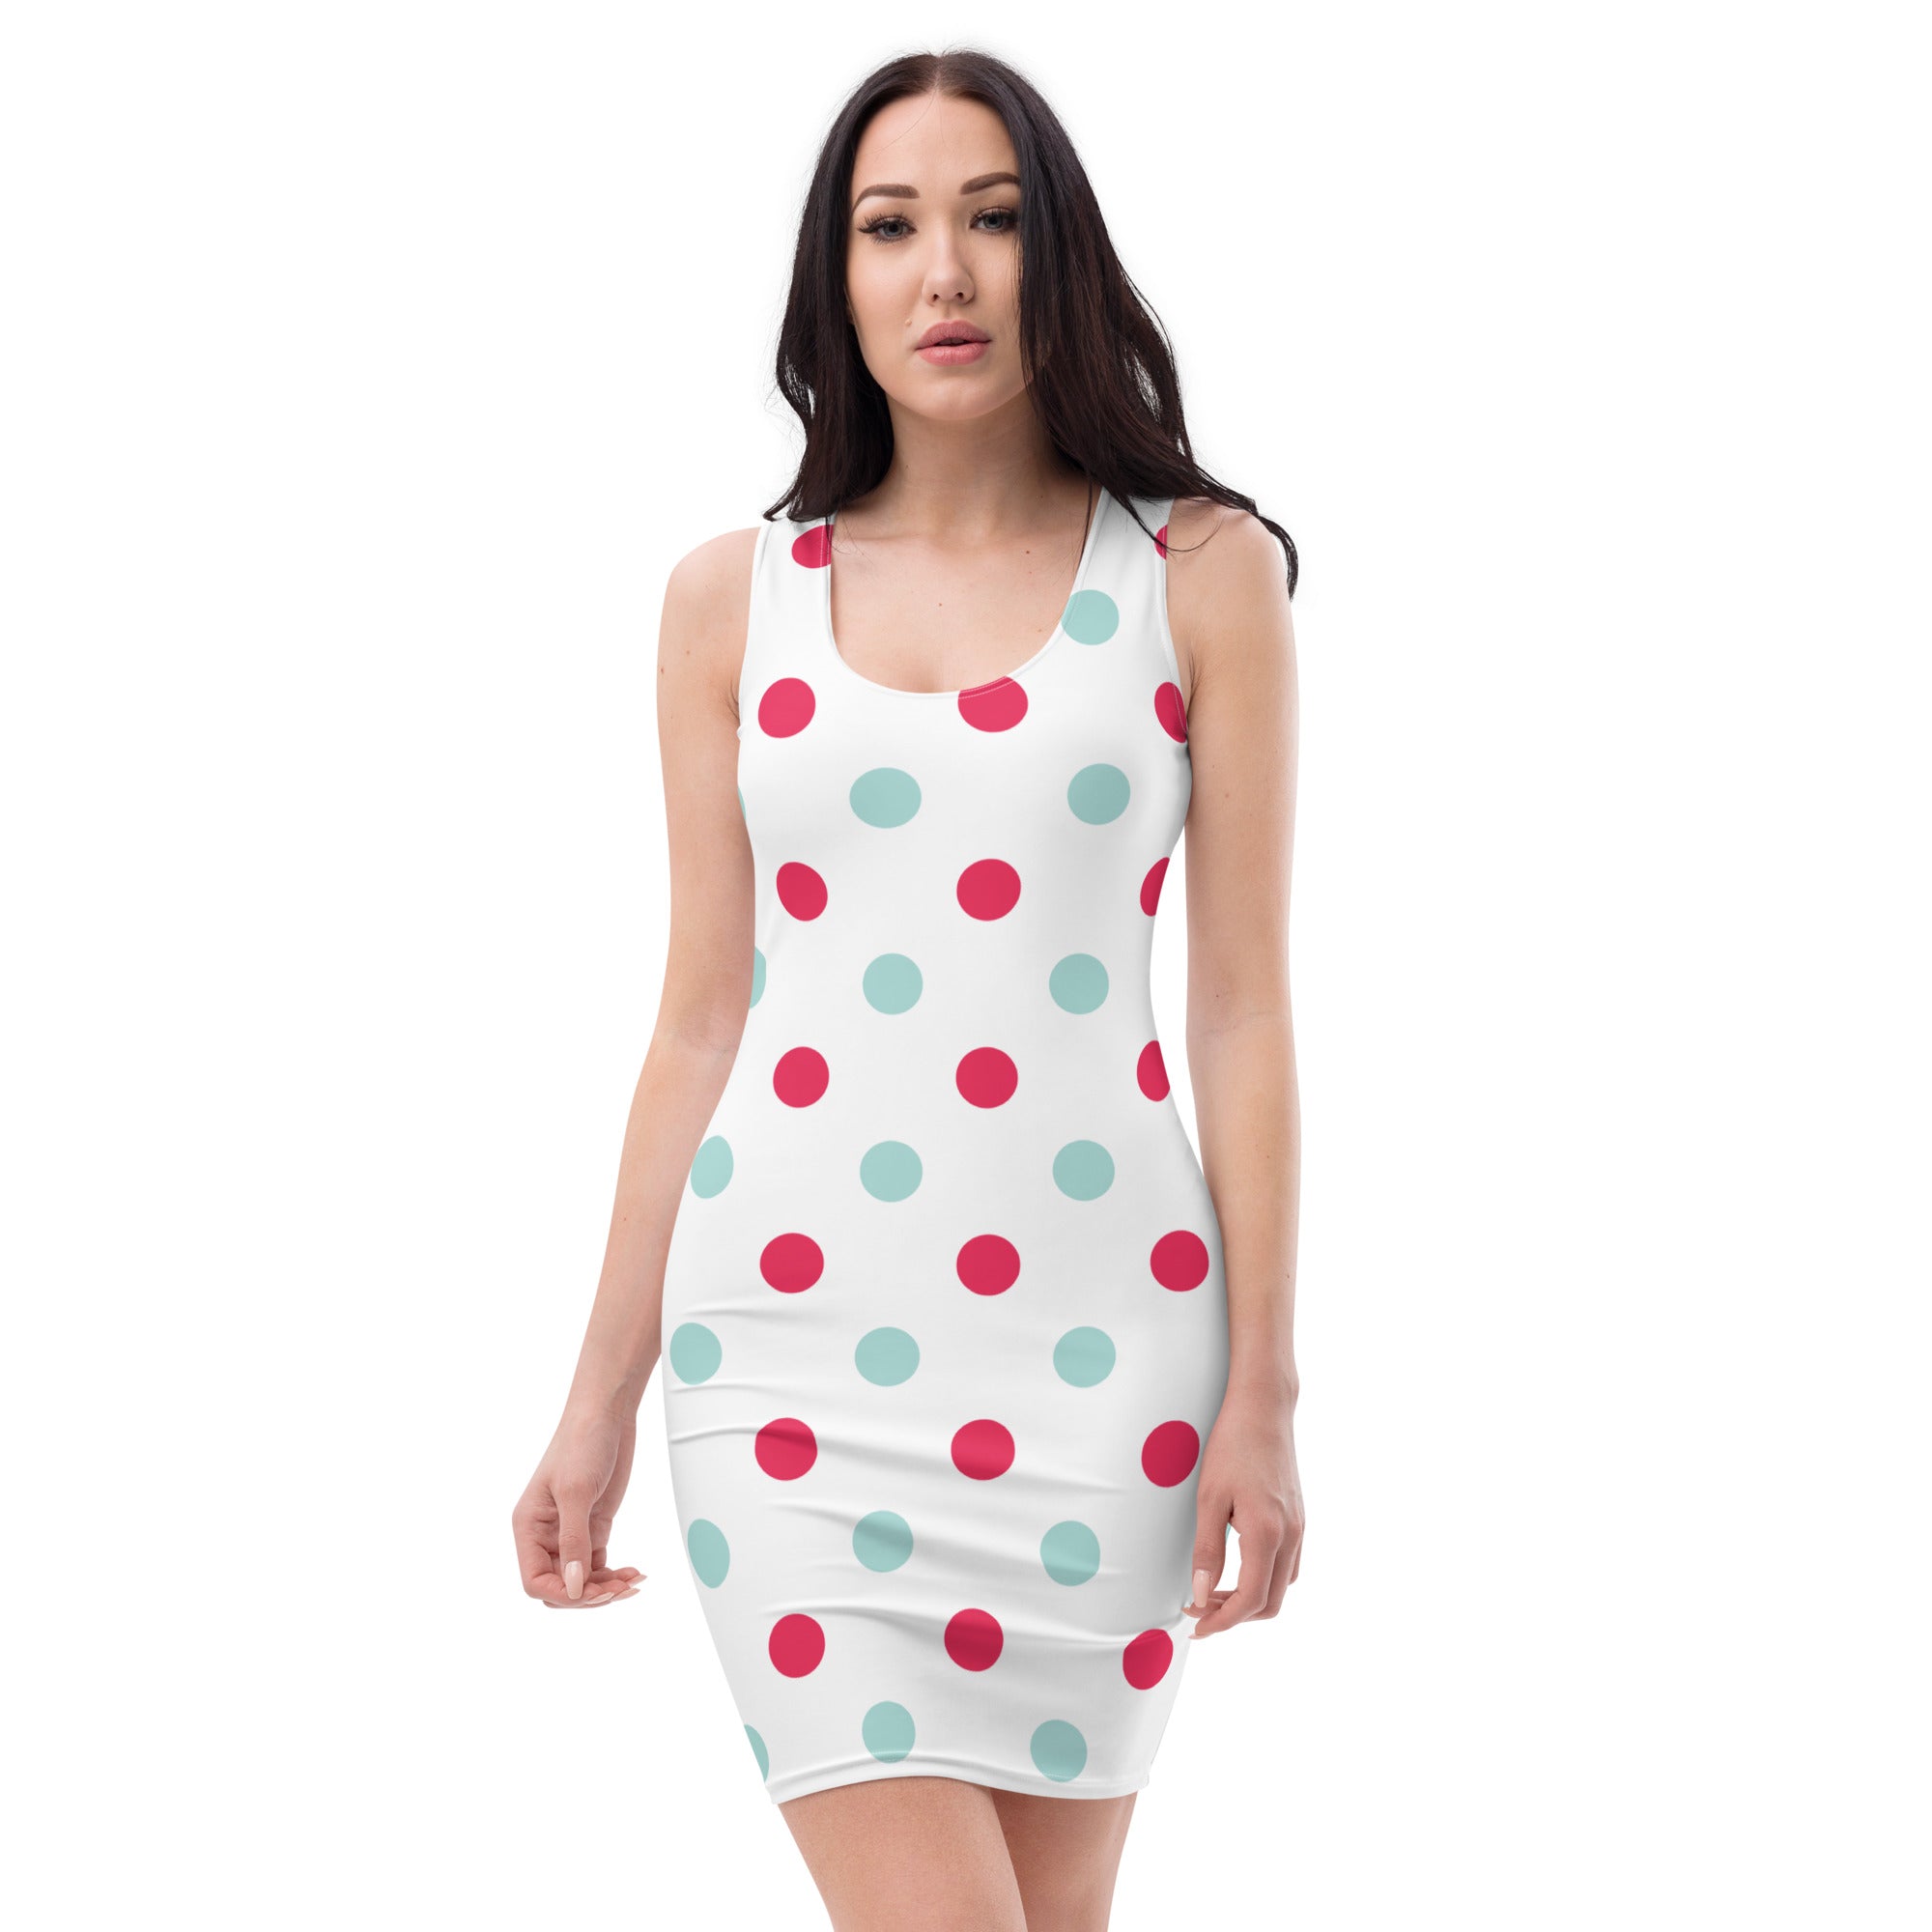 "Chic Dots: Stylish Polka Dot Mini Fitted Dress", lioness-love